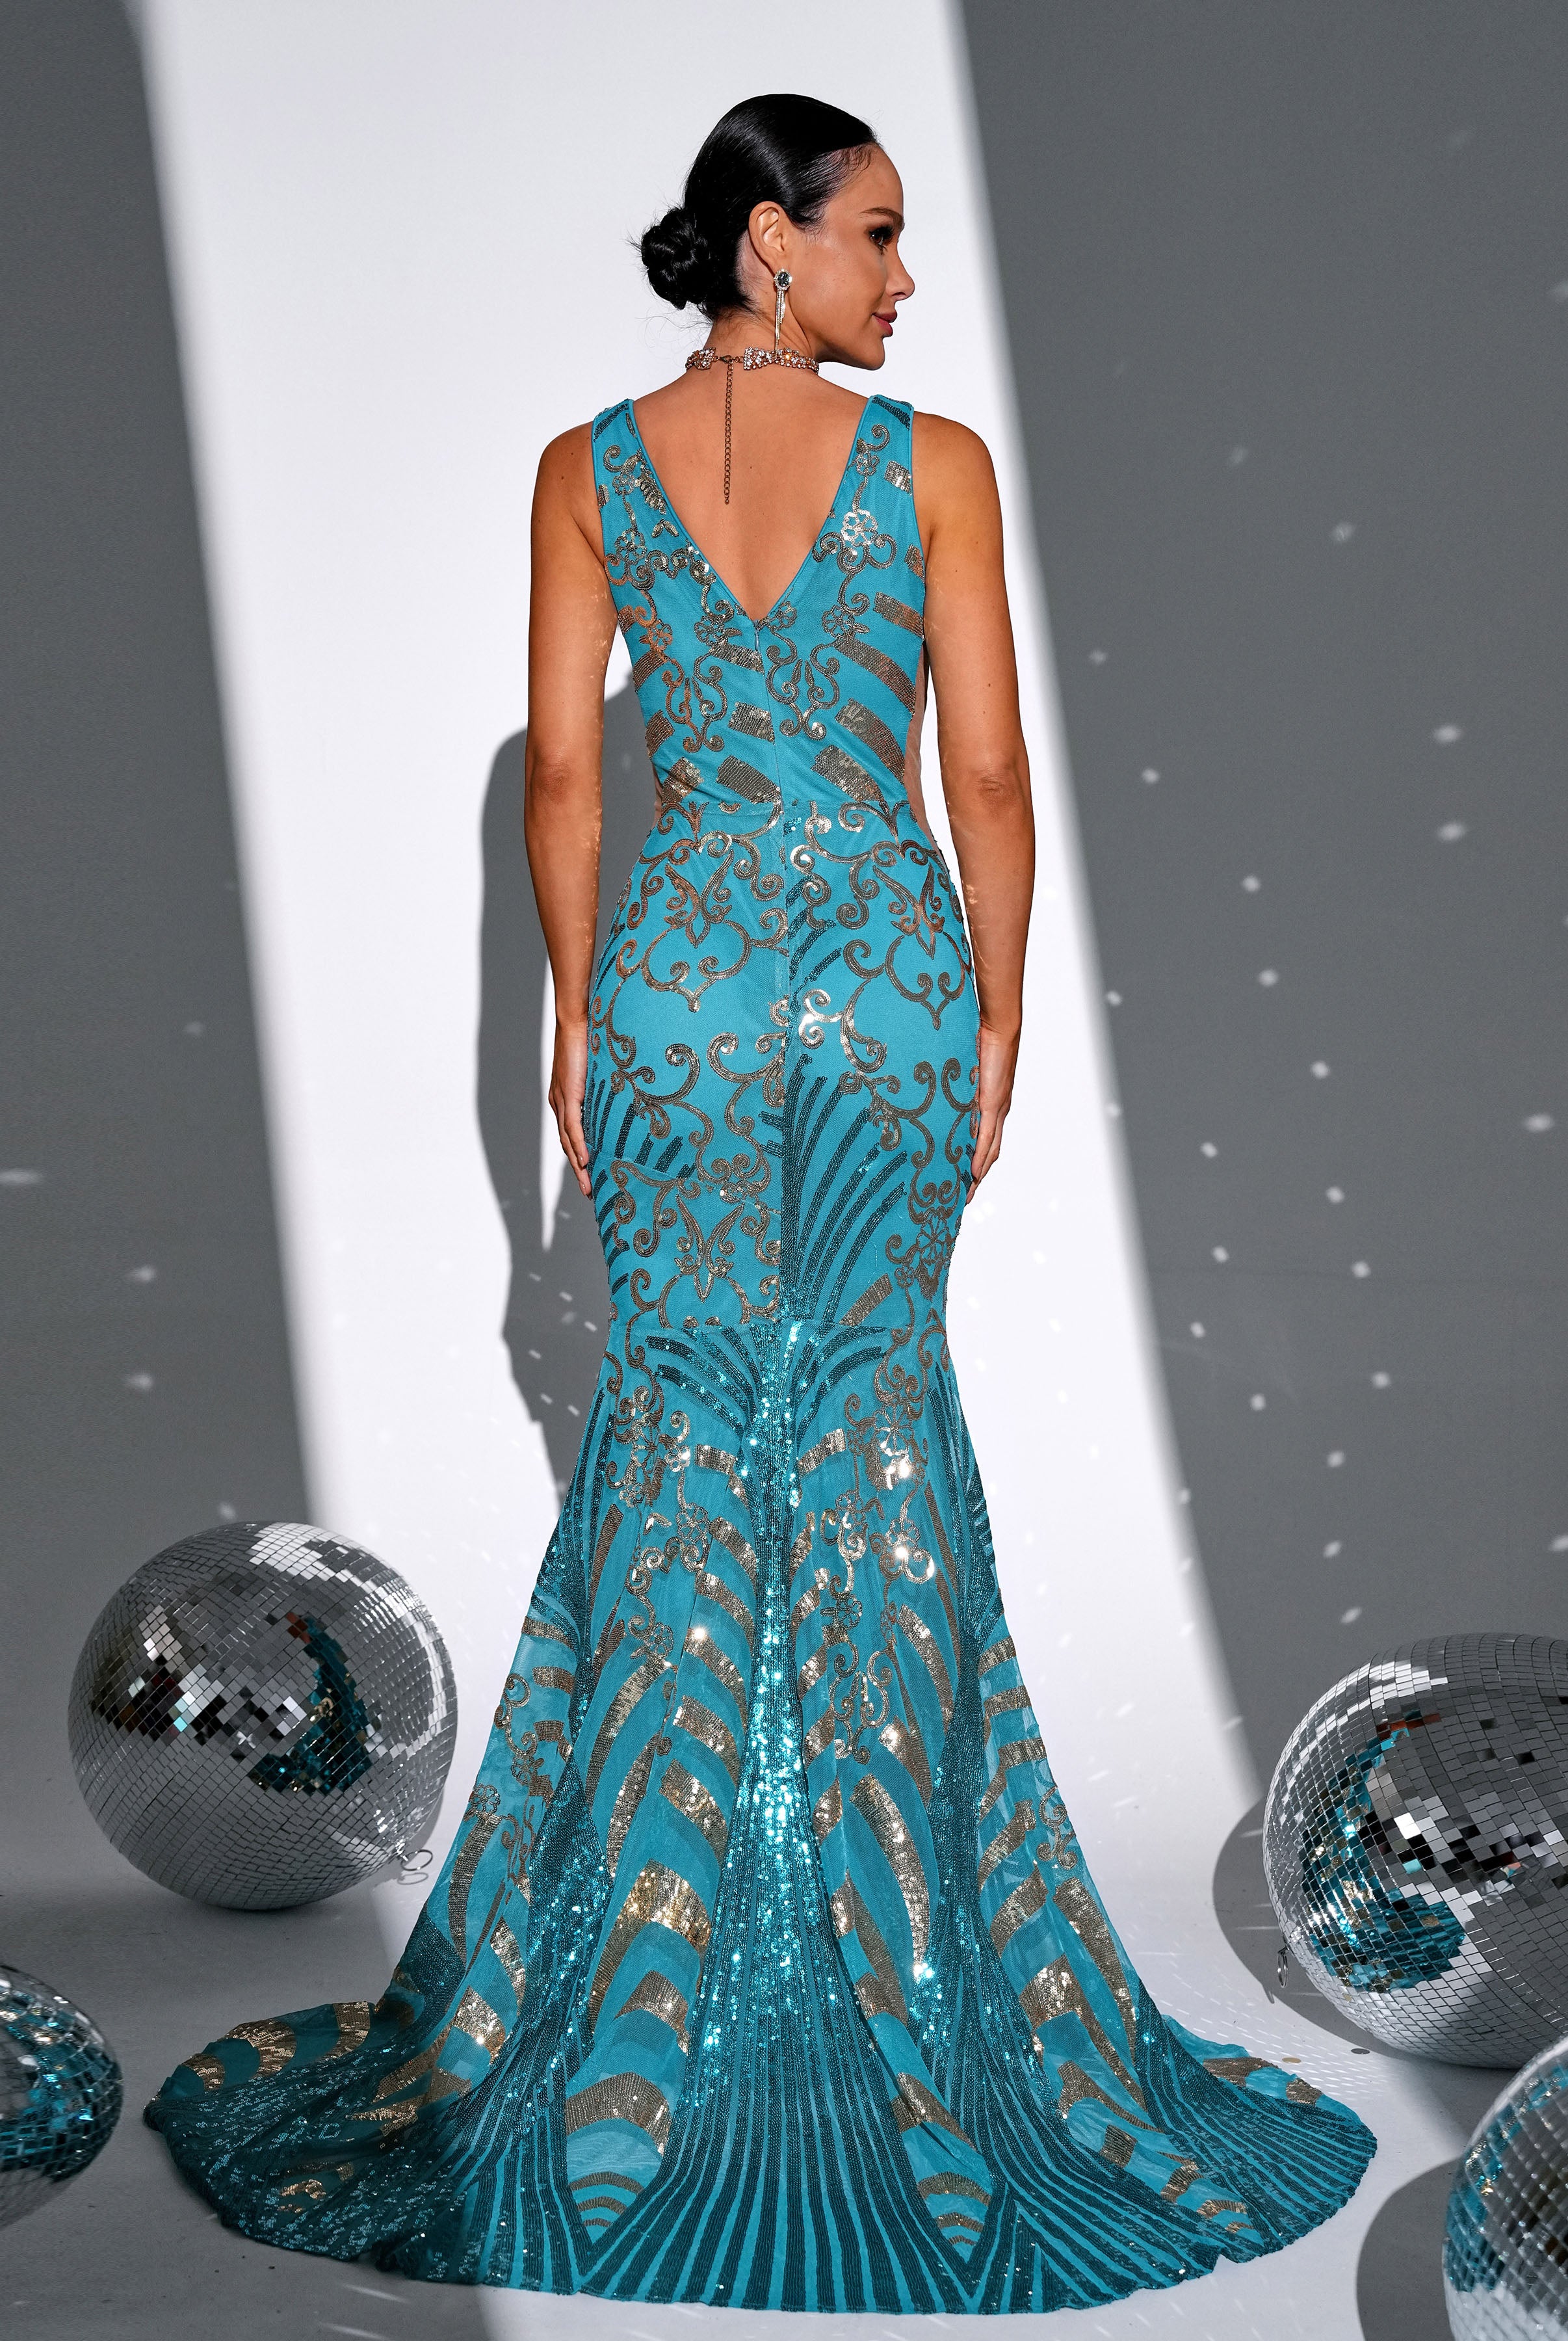 Cutout Deep V-neck Mermaid Sequin Formal Dress RM21600